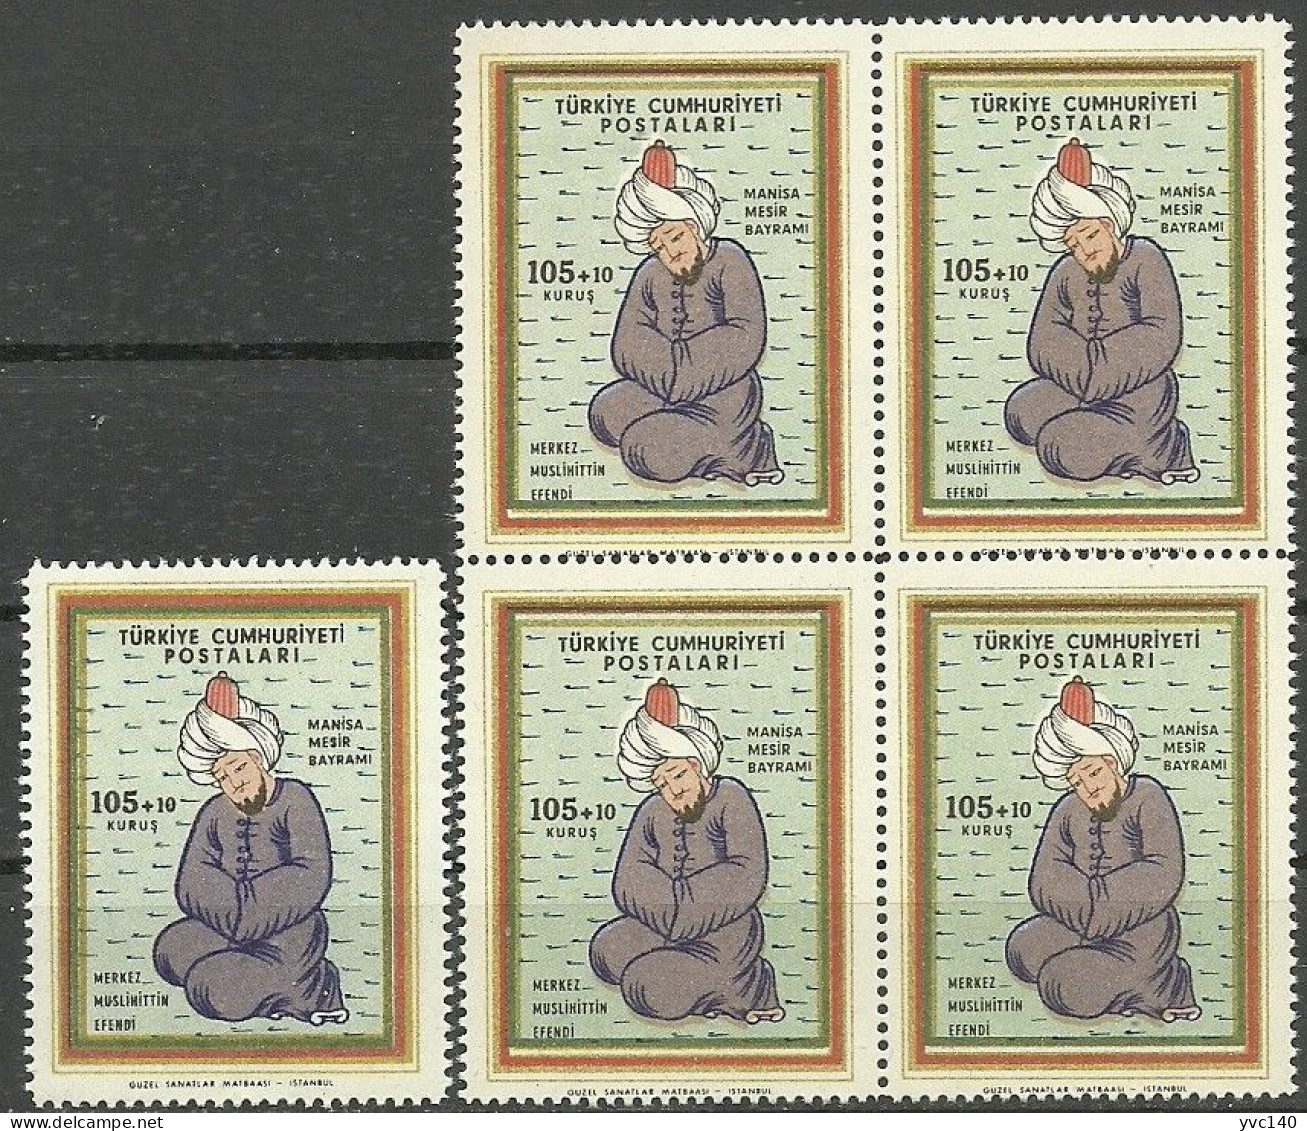 Turkey; 1960 Manisa Mesir Bairam ERROR "Shifted Print (Frame)" - Unused Stamps